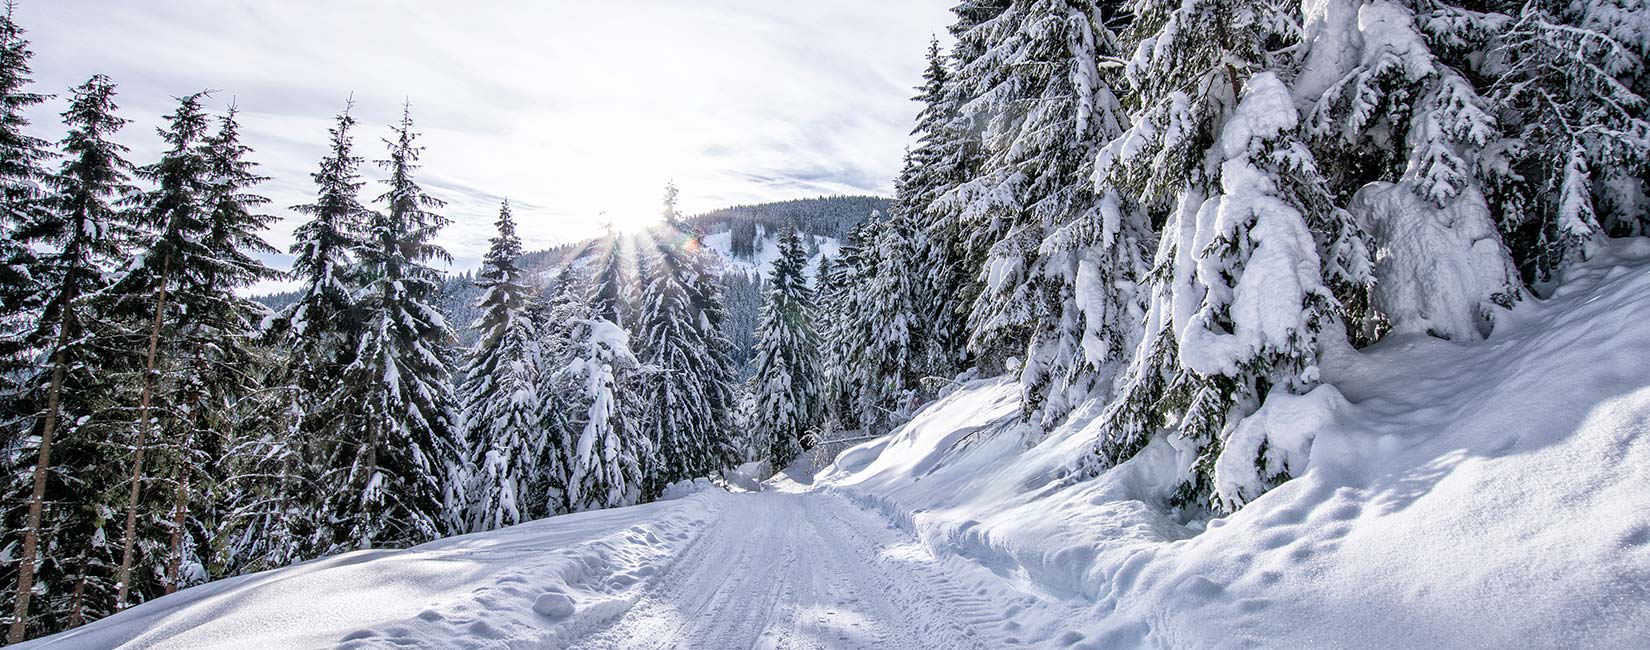 winter_zillertal_landlaufen_header